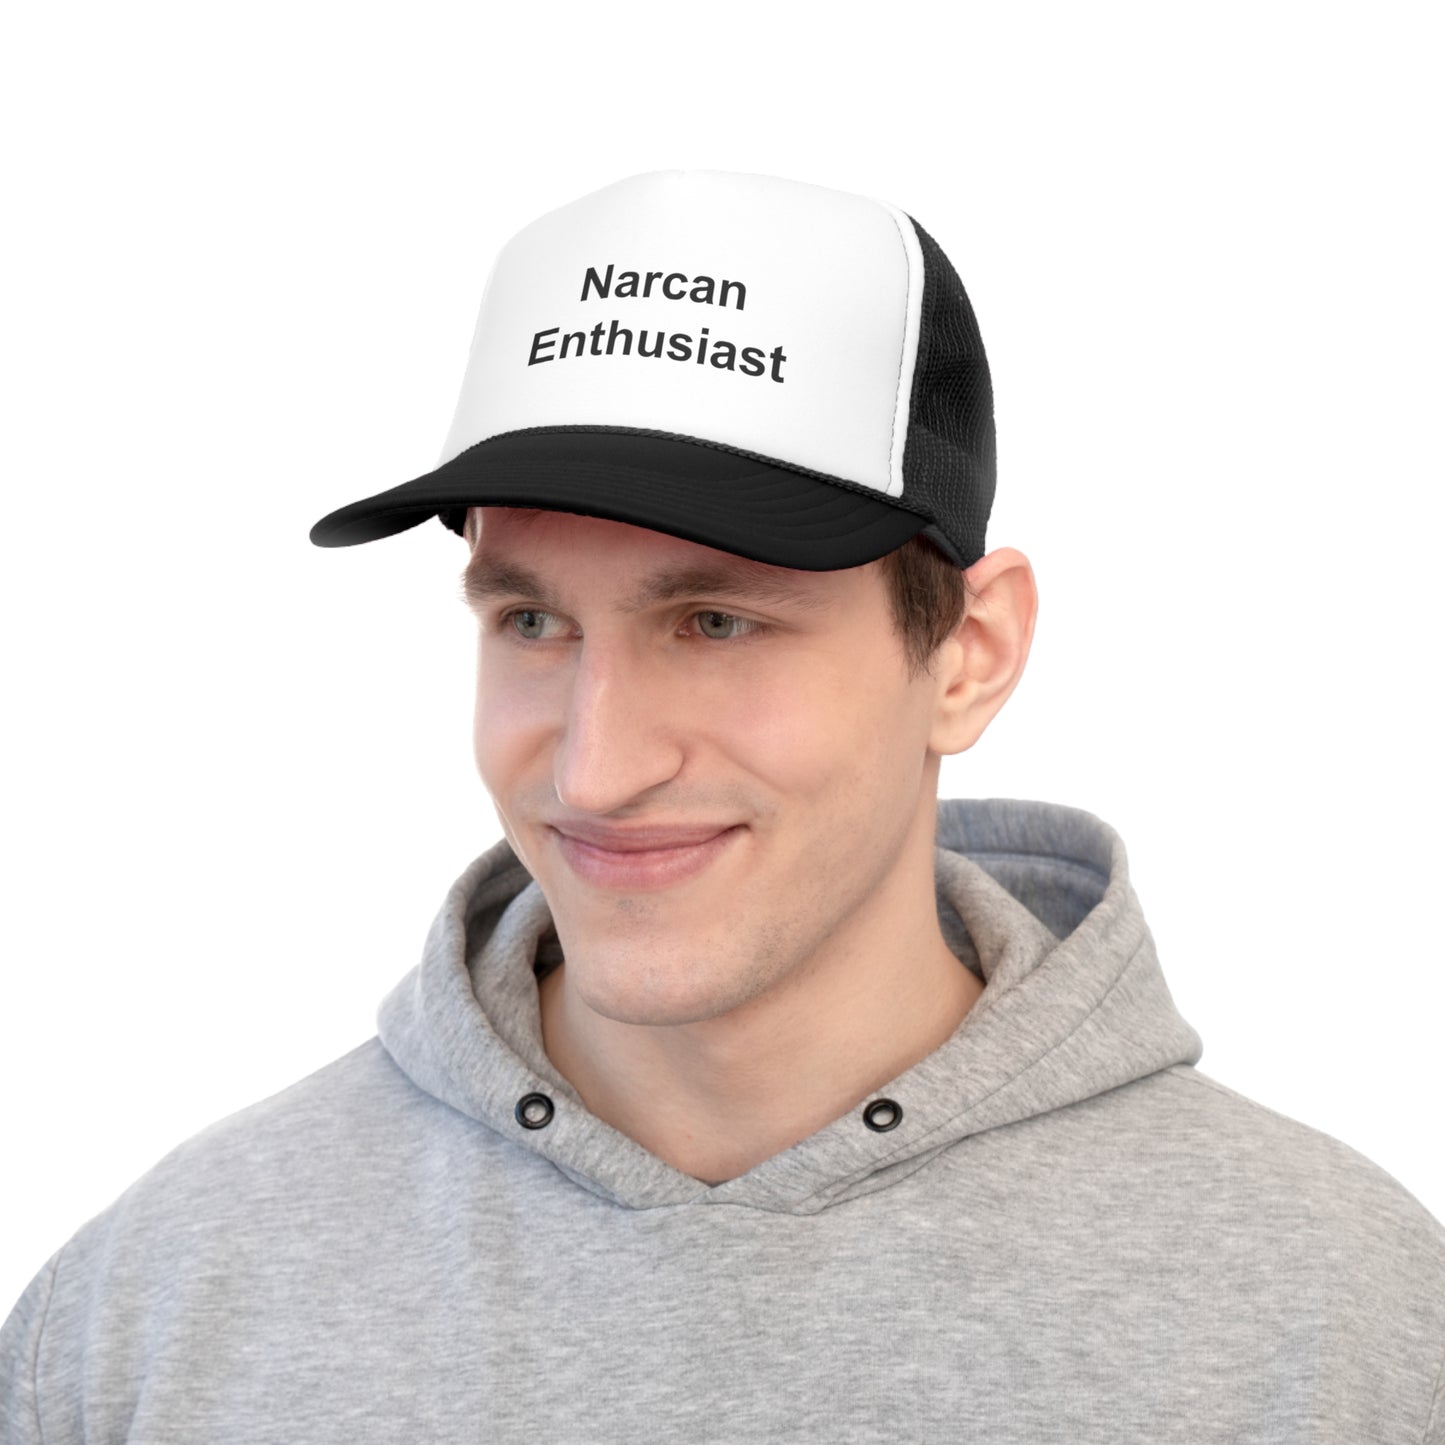 Narcan Enthusiast Trucker Caps